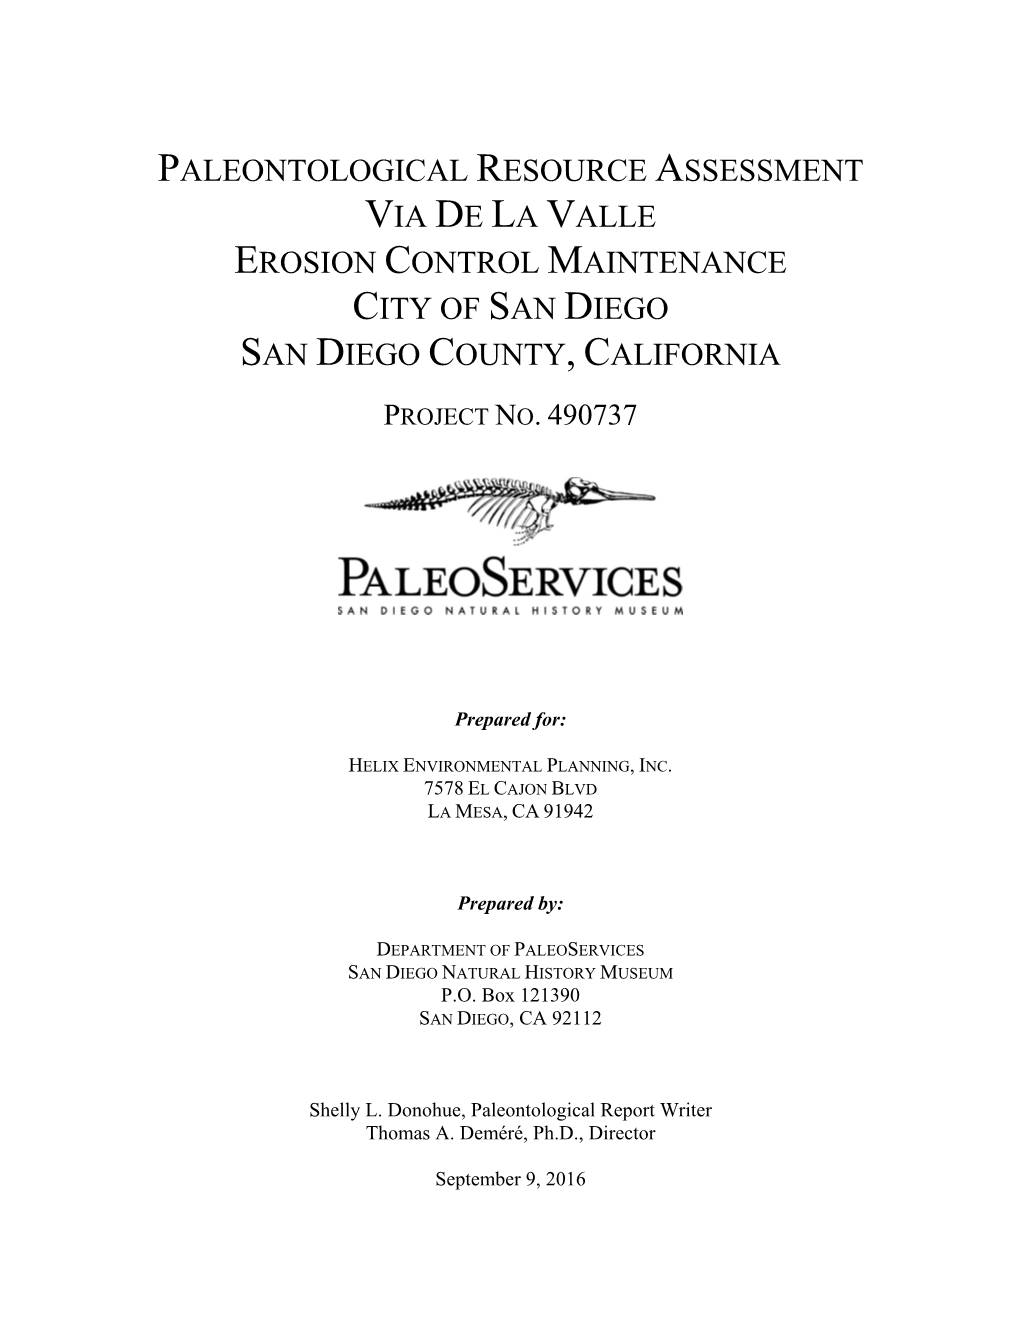 Paleontological Resource Assessment Via De La Valle Erosion Control Maintenance City of San Diego San Diego County, California